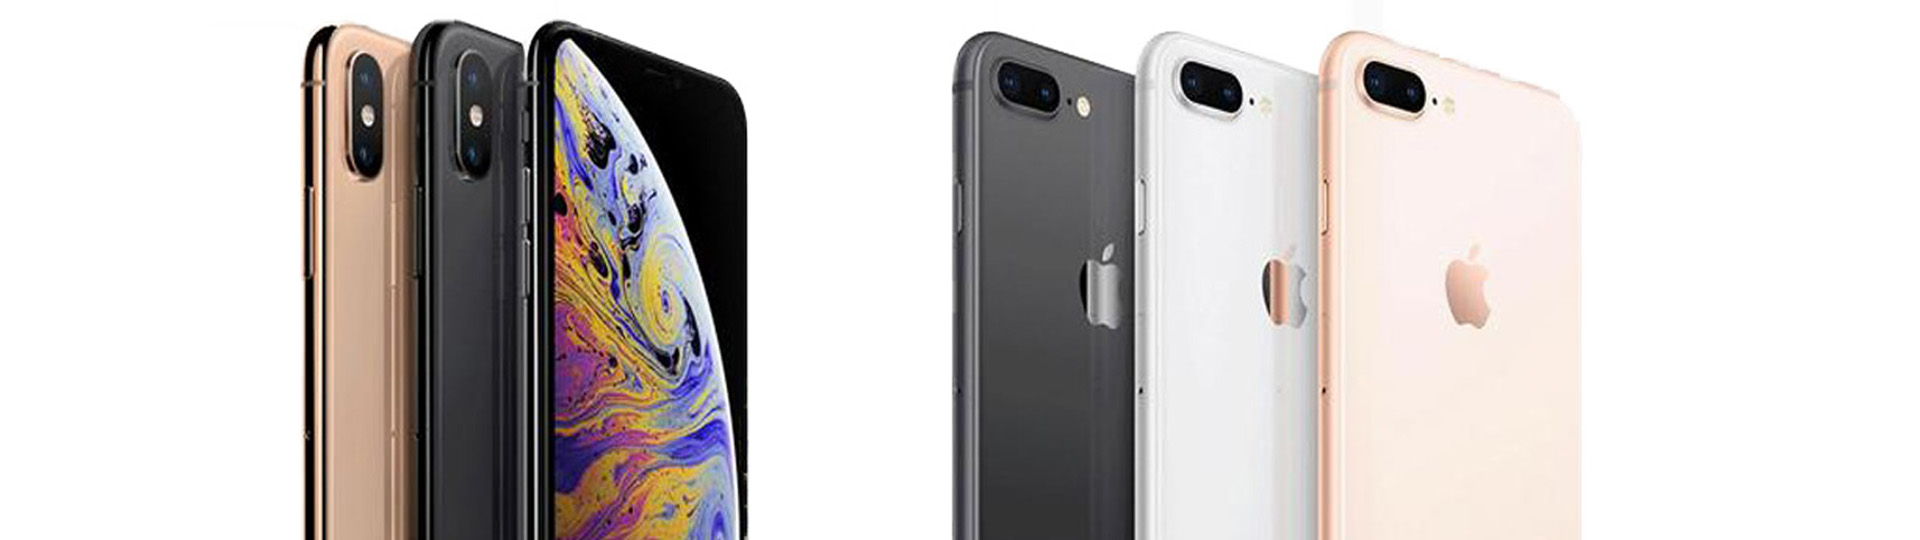 گوشی موبایل اپل iPhone XS Max Dual SIM Space Gray 64GB